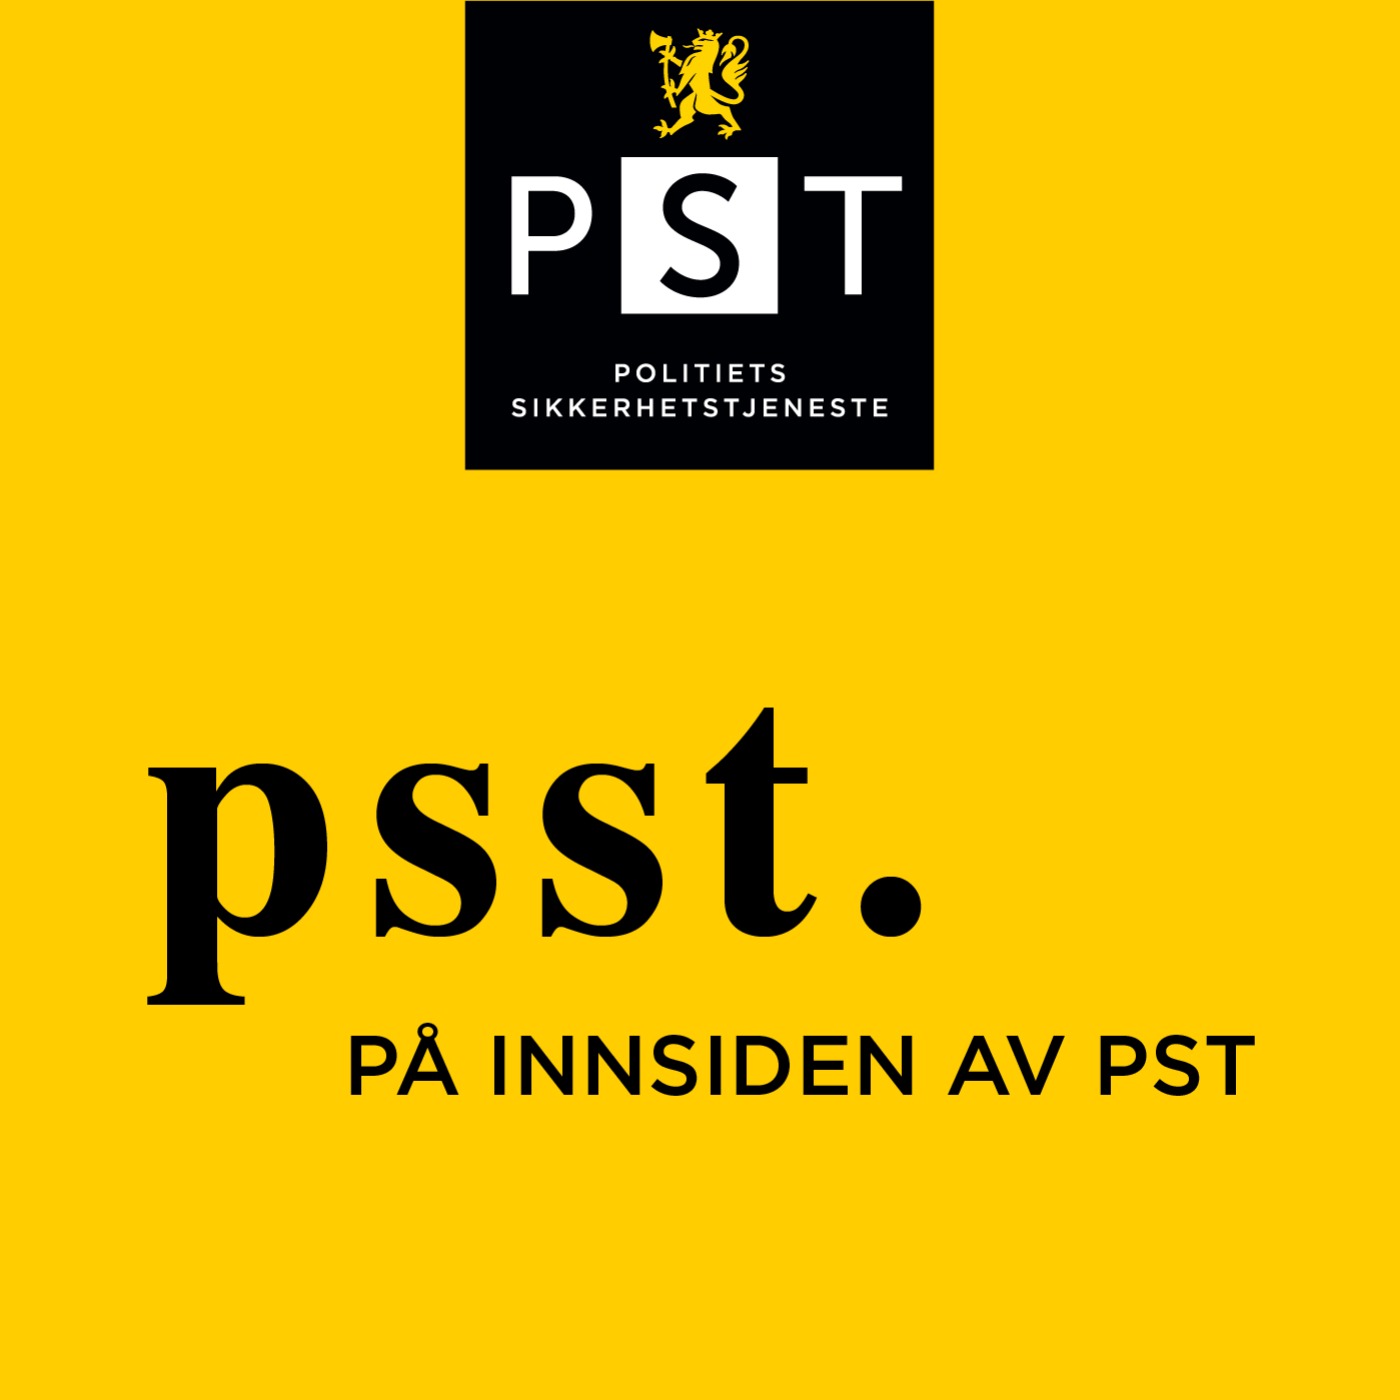 PST-logo